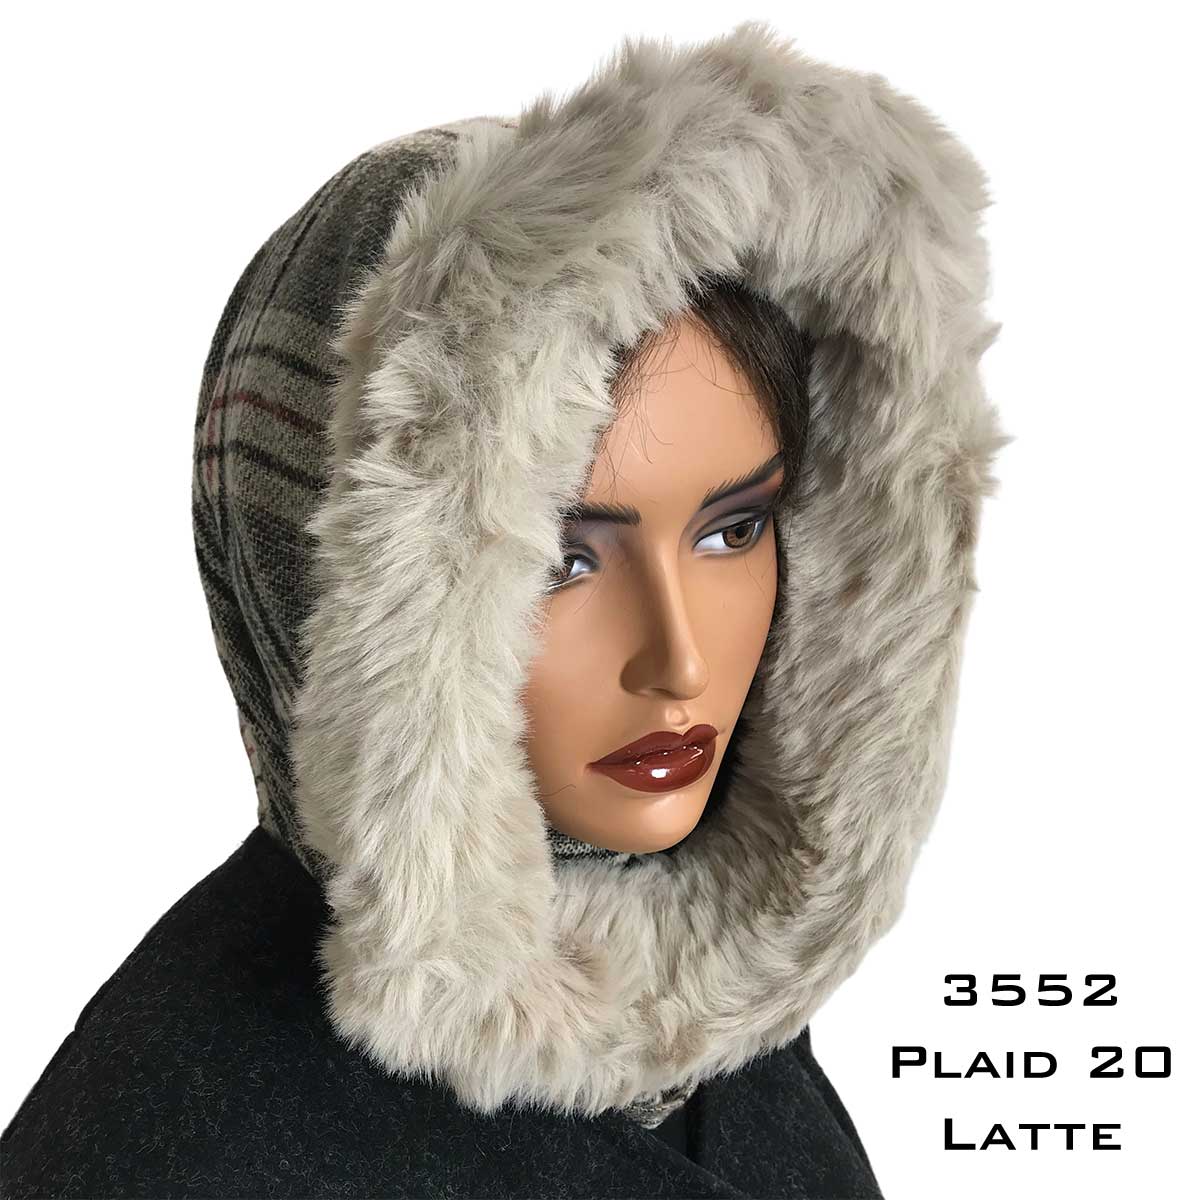 Plaid #20 <br> Latte Fur Trimmed Infinity Hood